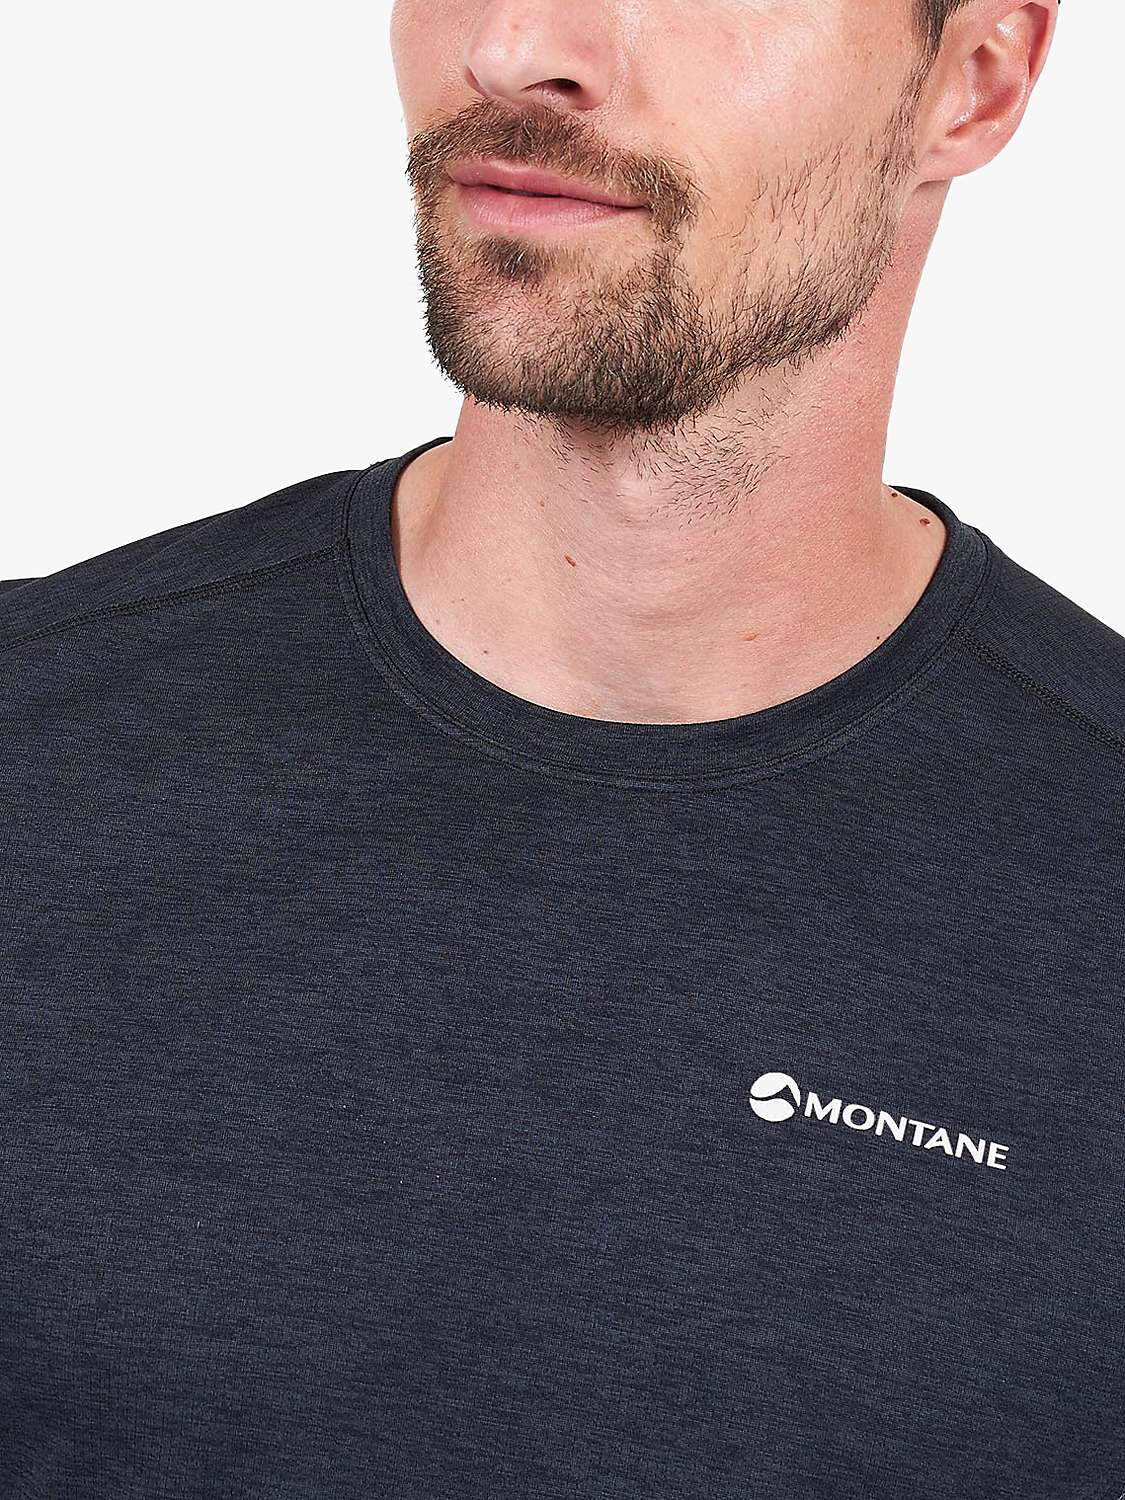 Buy Montane Dart Recycled Short Sleeve Top Online at johnlewis.com